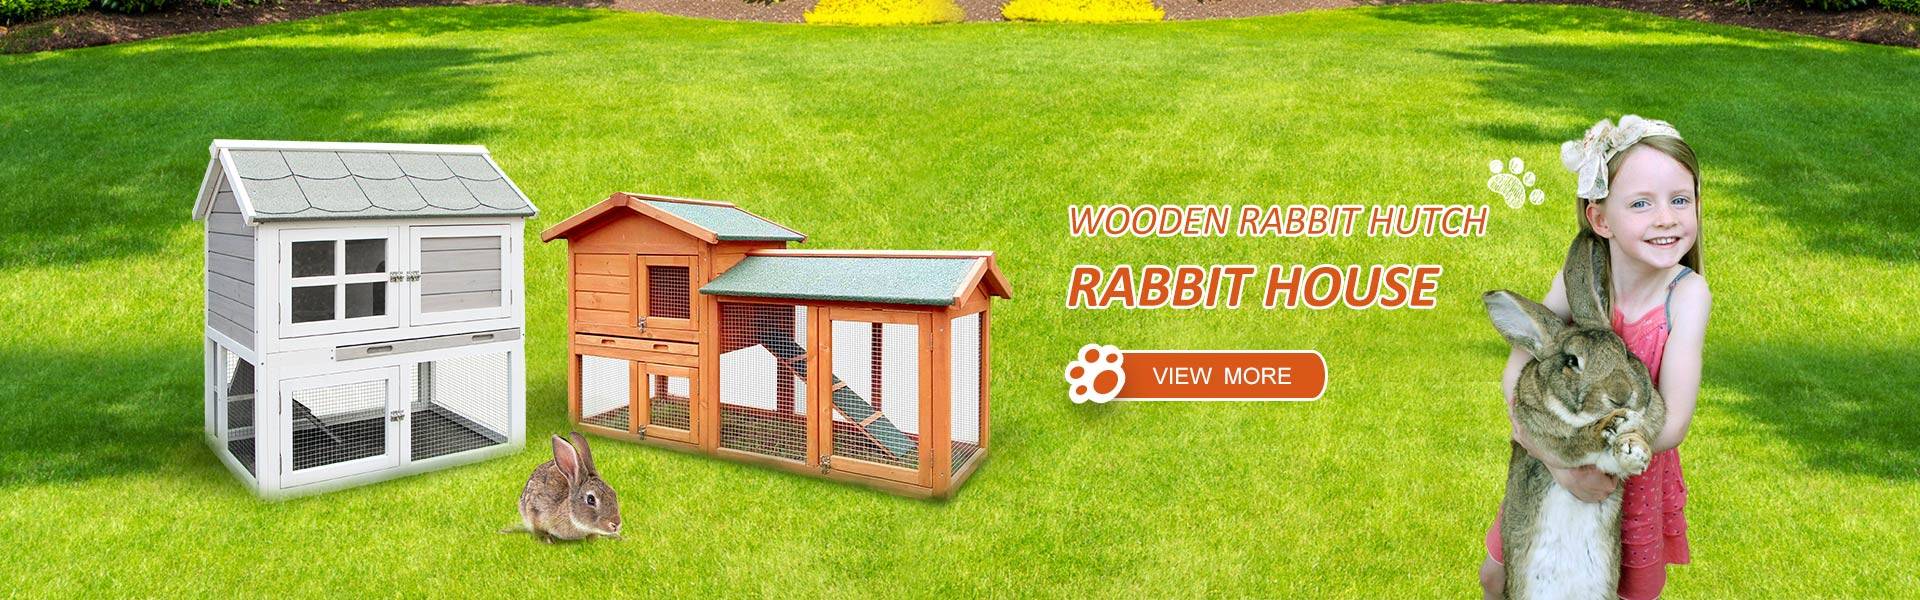 Wooden rabbit hutch/ rabbit house